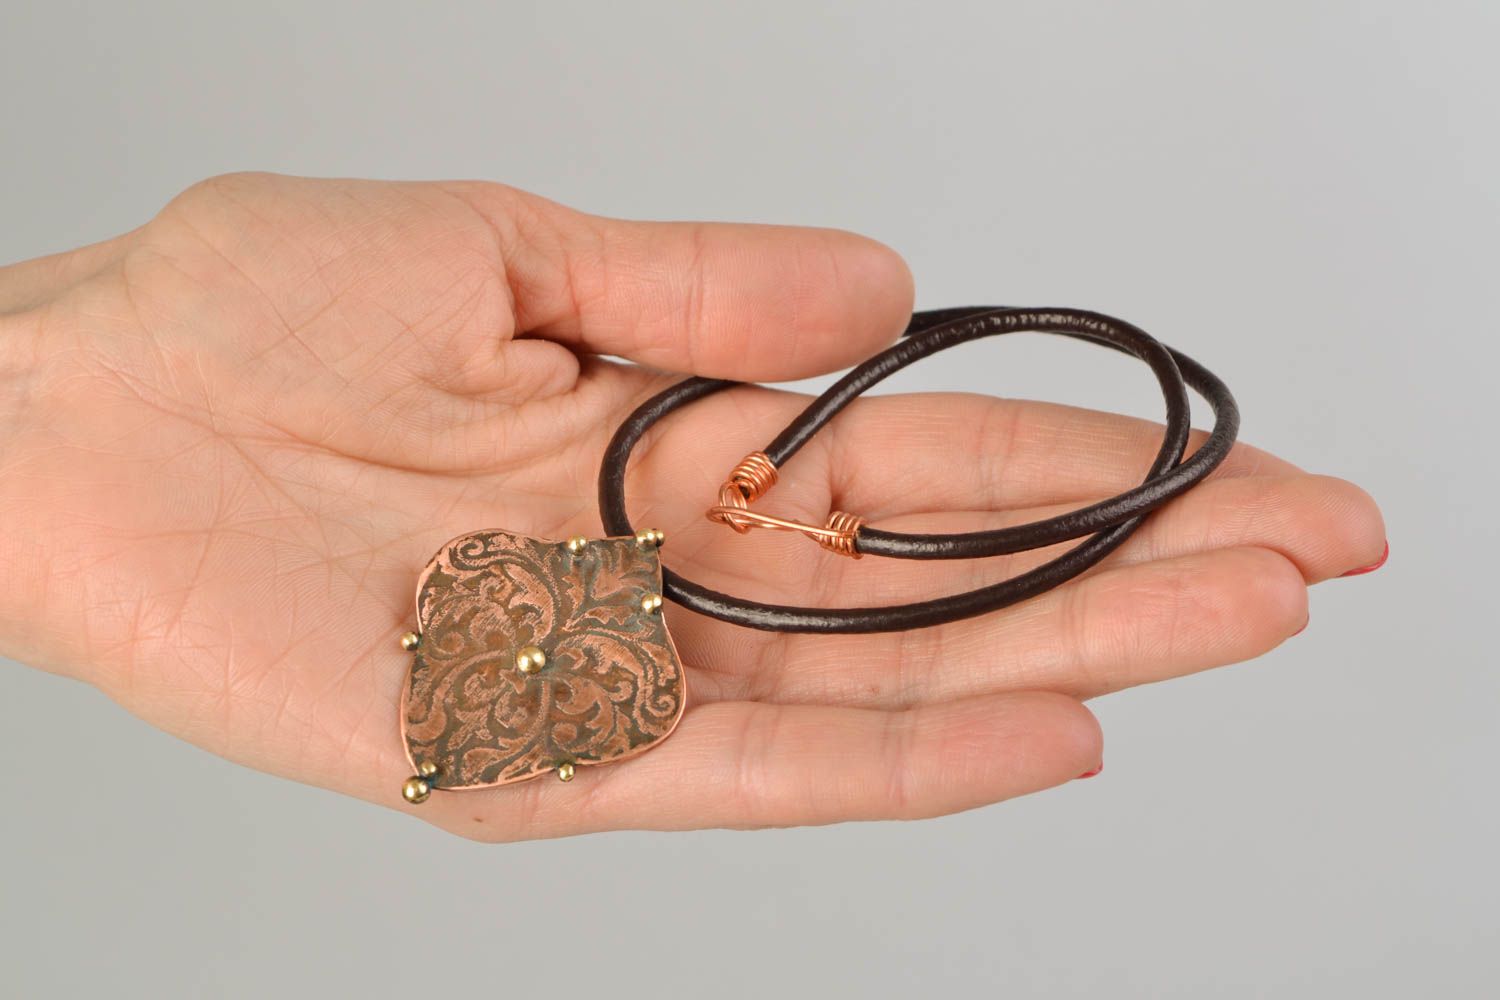 Latten and copper pendant on cord photo 2